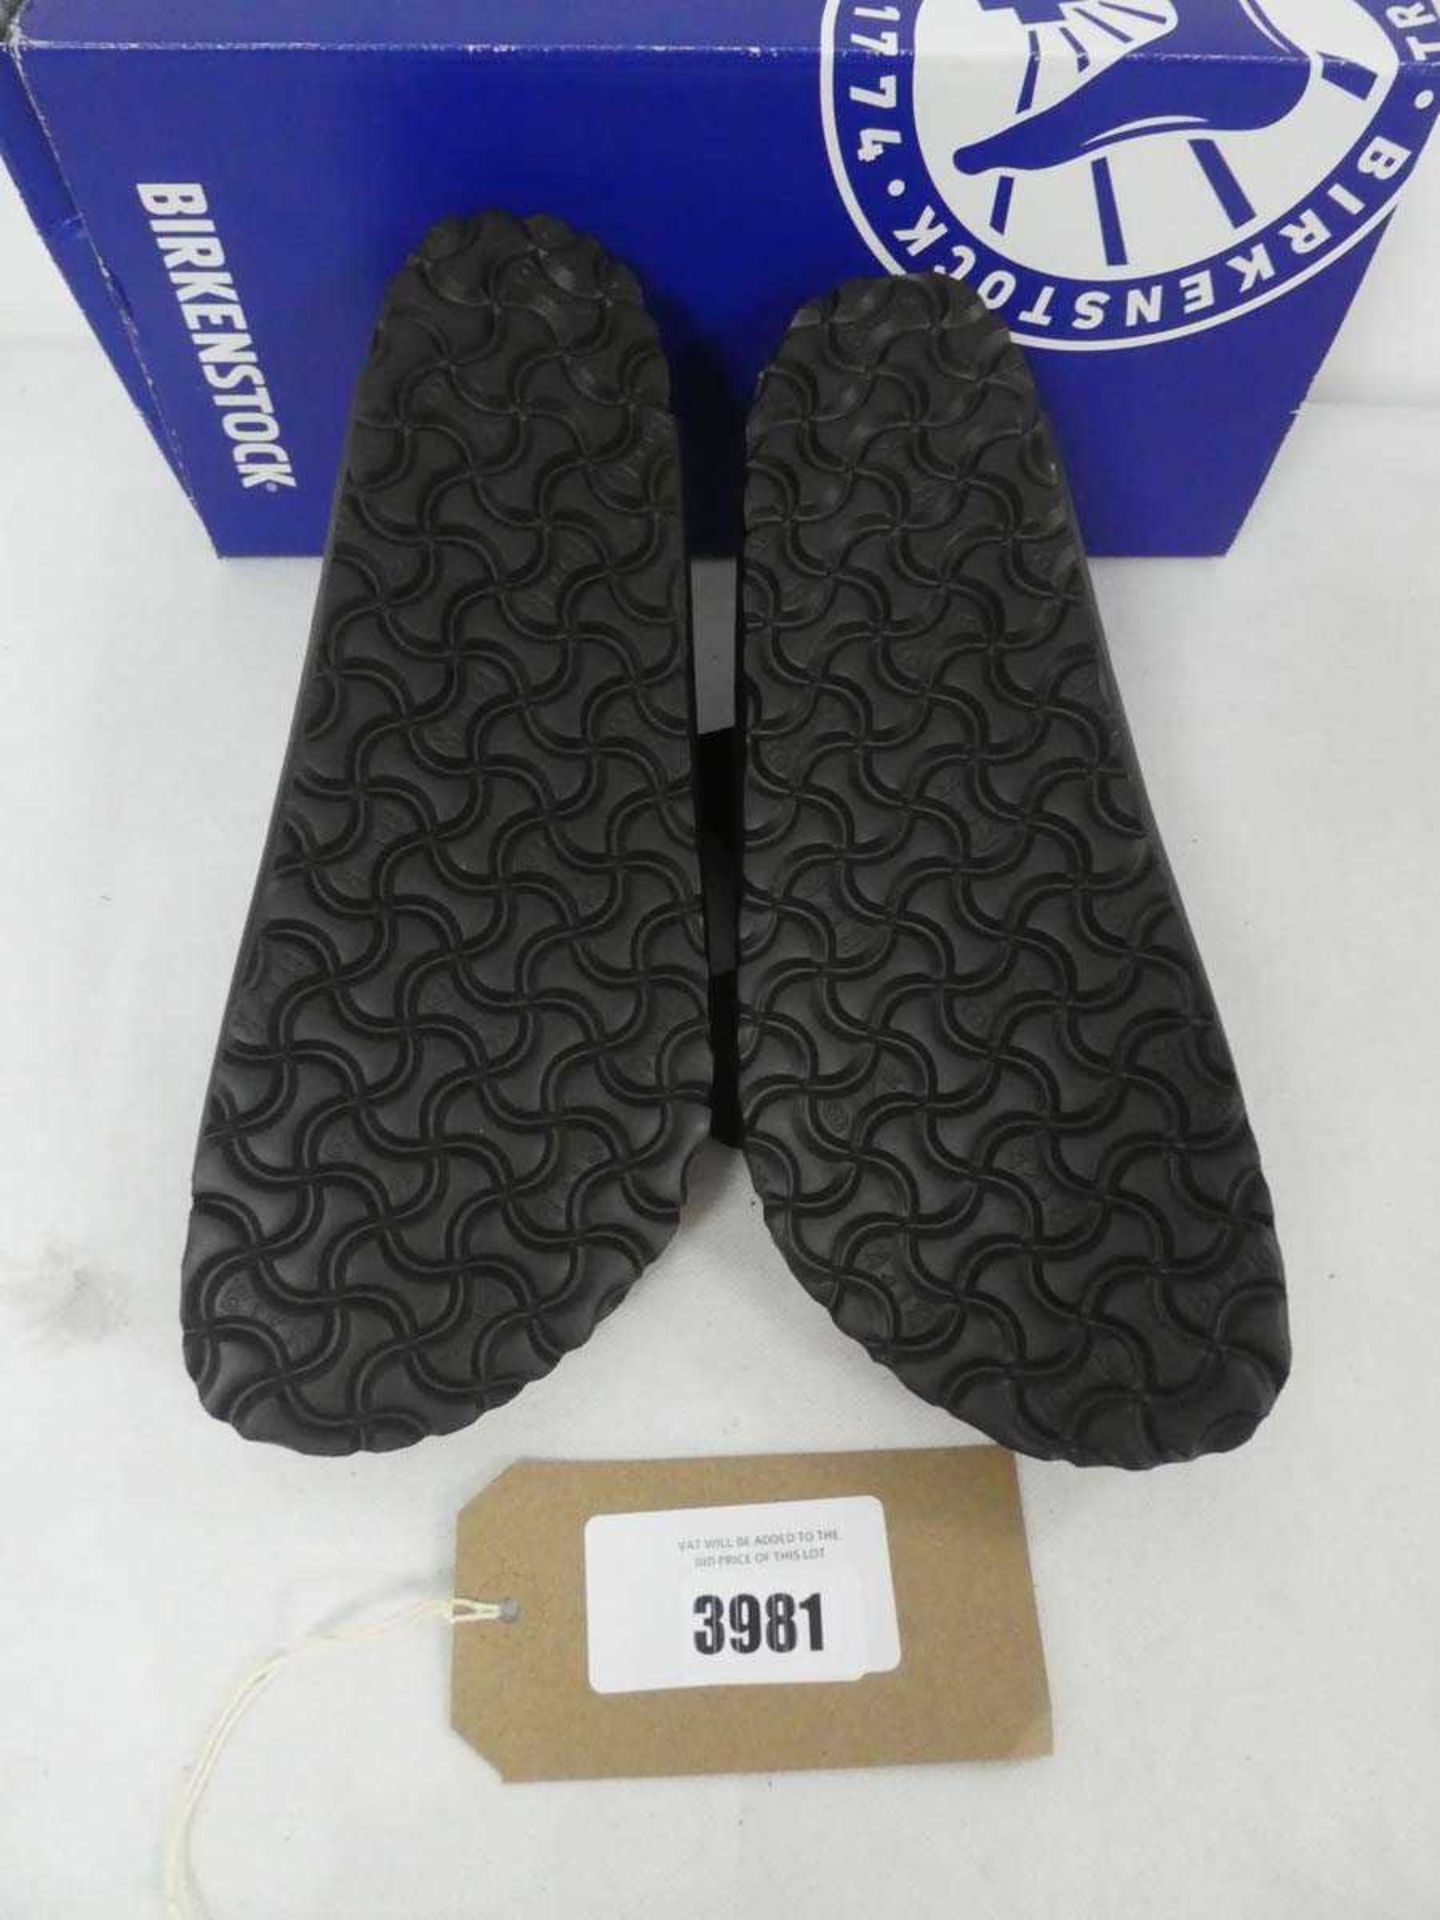 +VAT Boxed pair of Birkenstock Arizona leather sandals, size 6 - Image 3 of 3